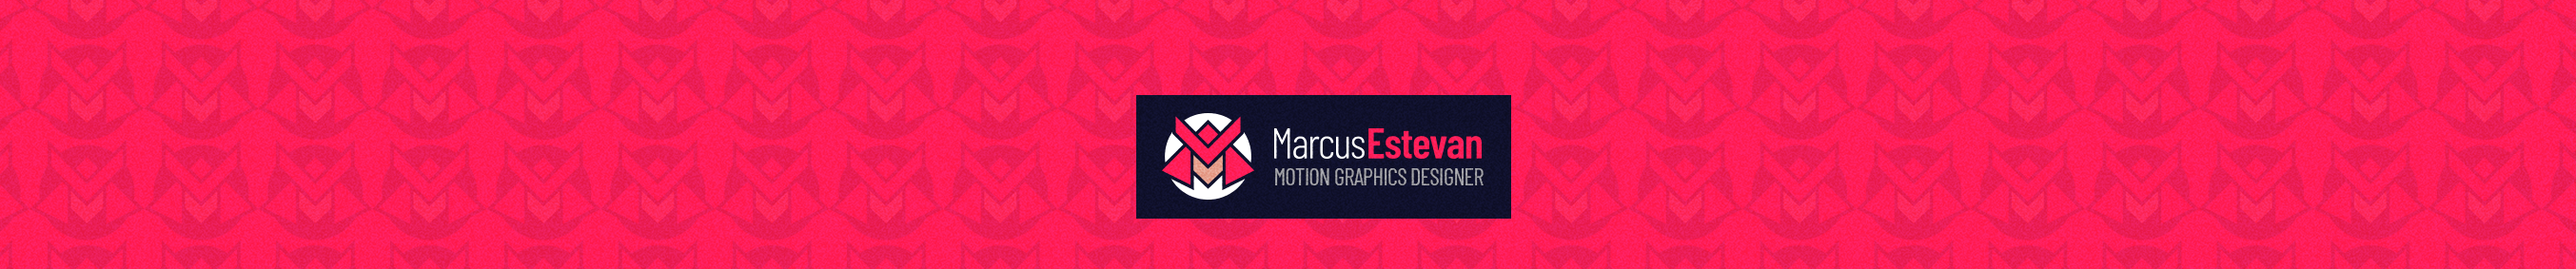 Banner del profilo di Marcus Estevan